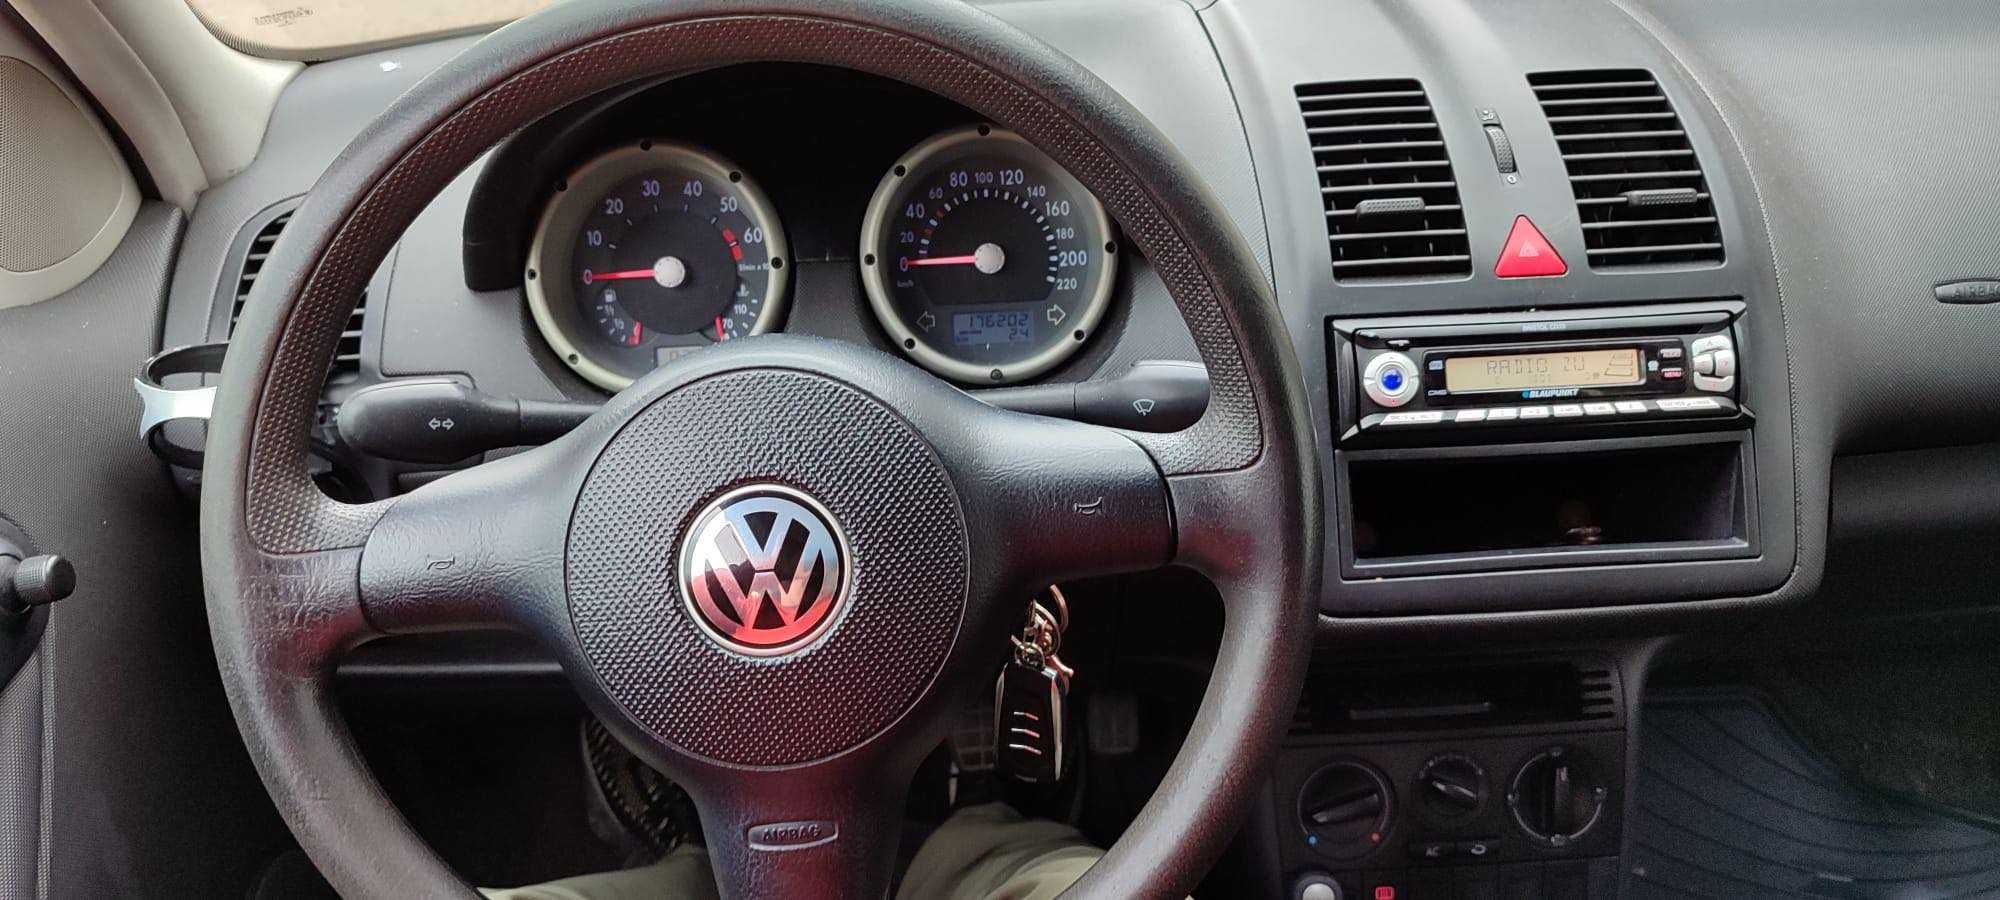 VW Polo 2001 1.4 benzina inscris